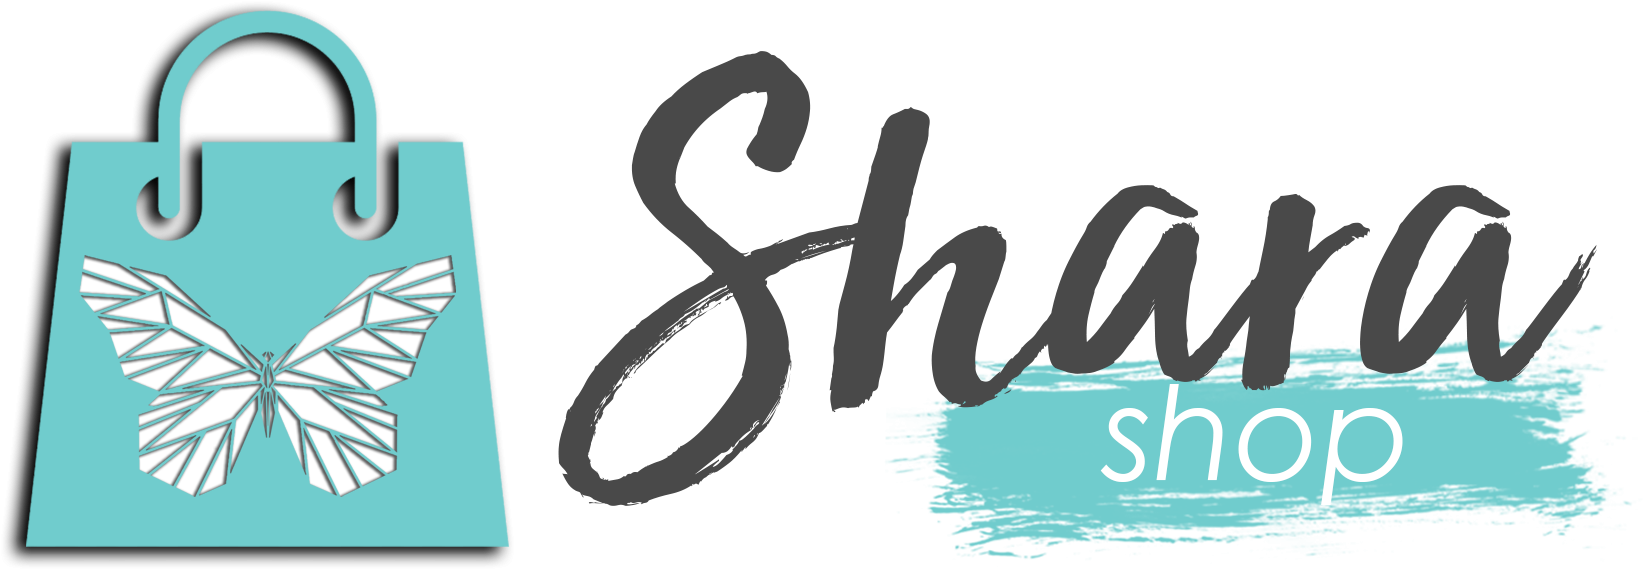 Shara Shop de Shara Pole Studio